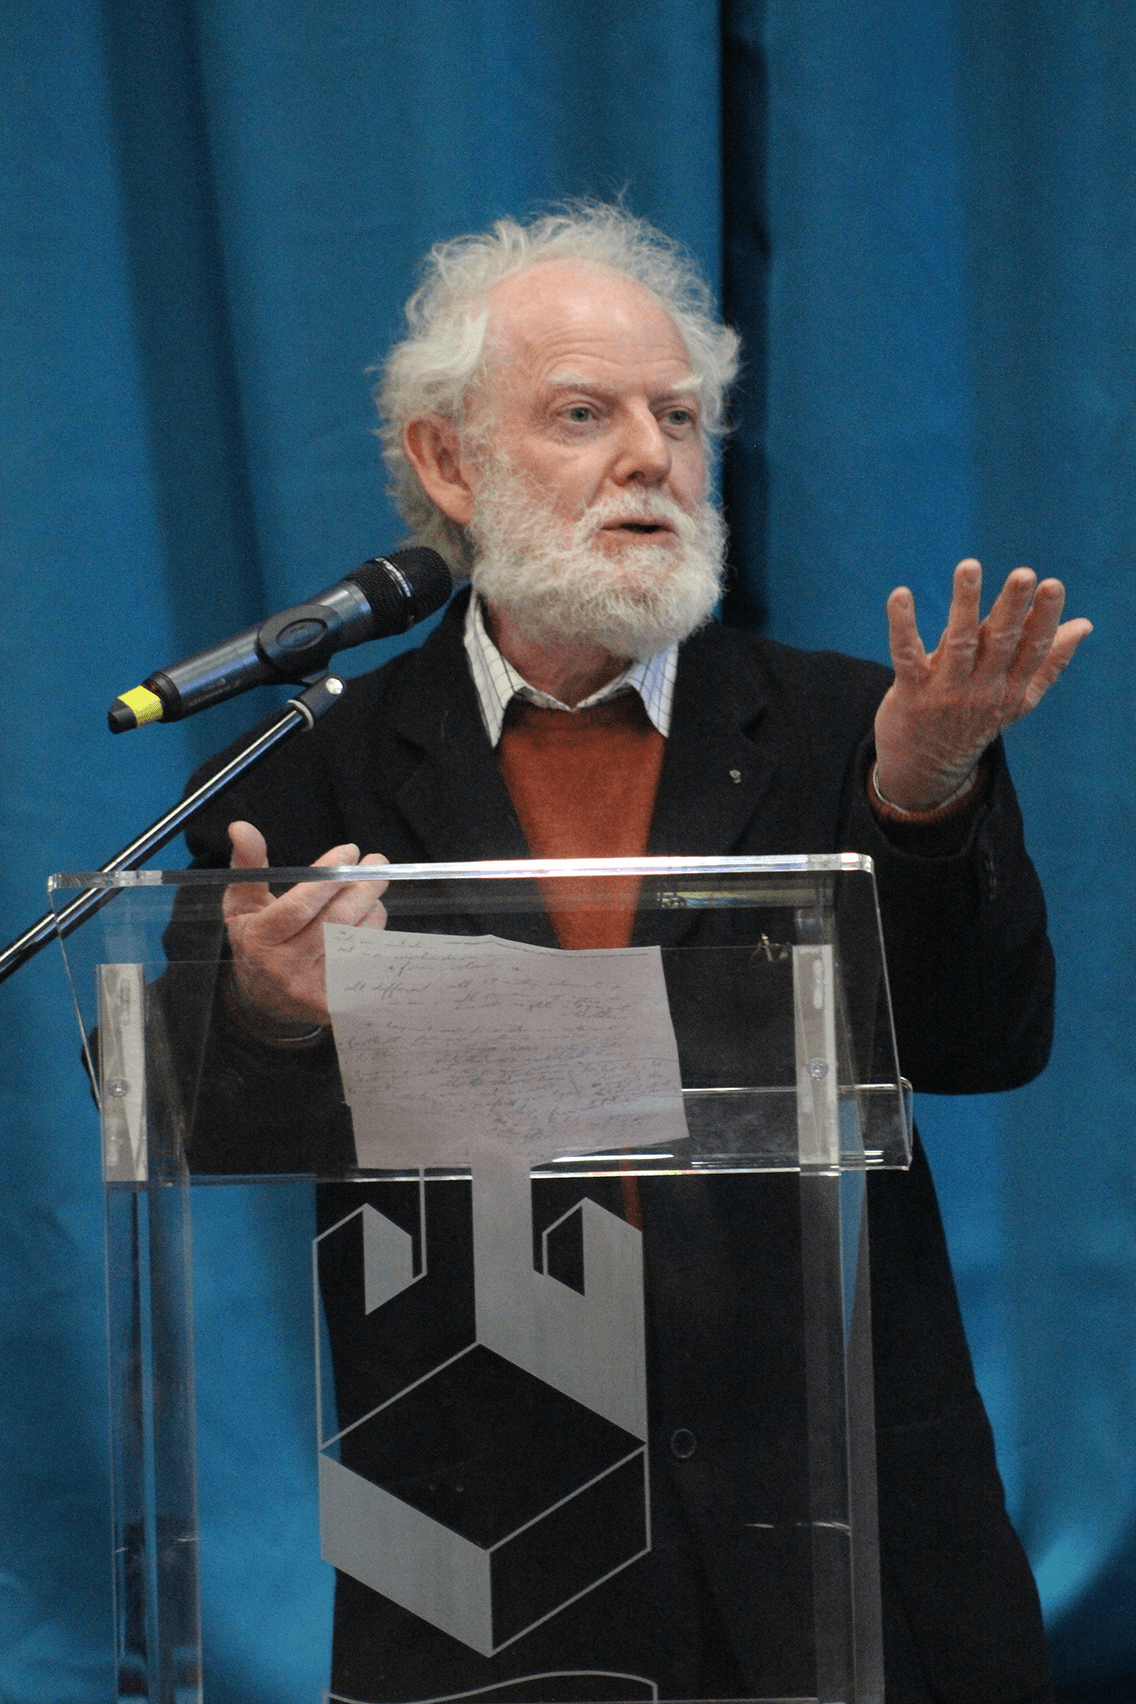 Professor Jean Michel Massing giving a speach